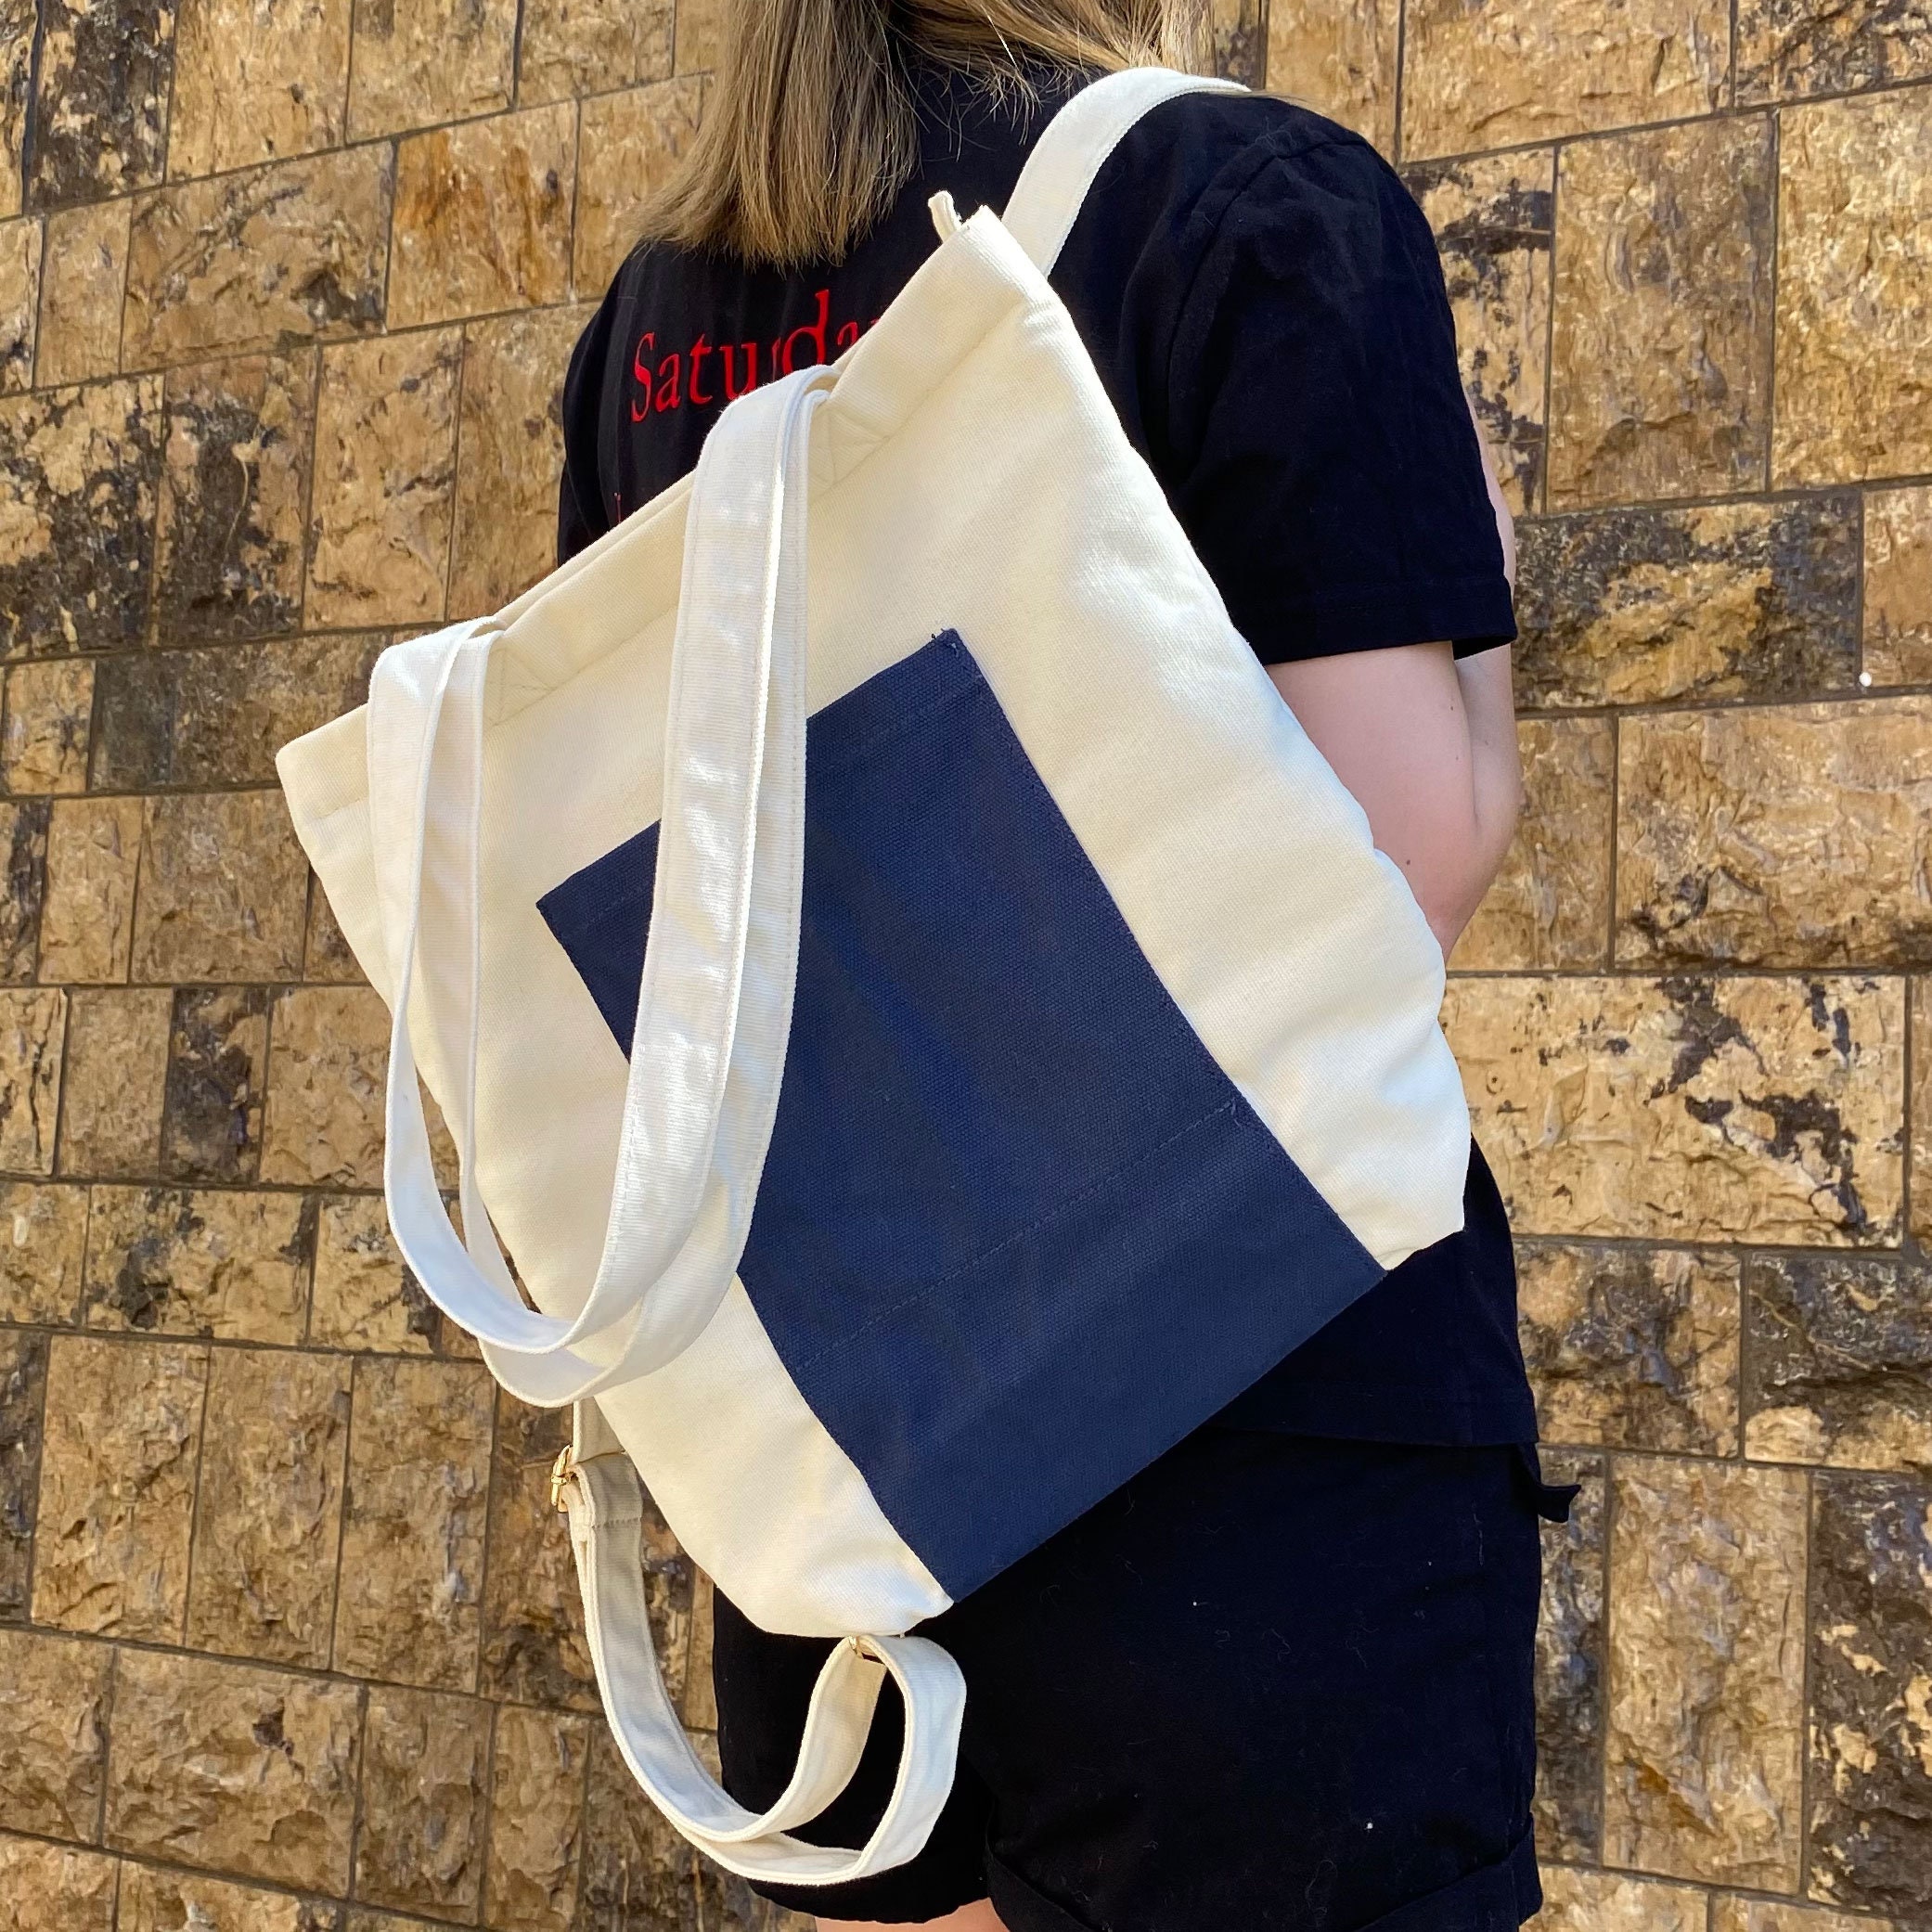 Canvas Toiletry Bag (Tan) – Kelamy